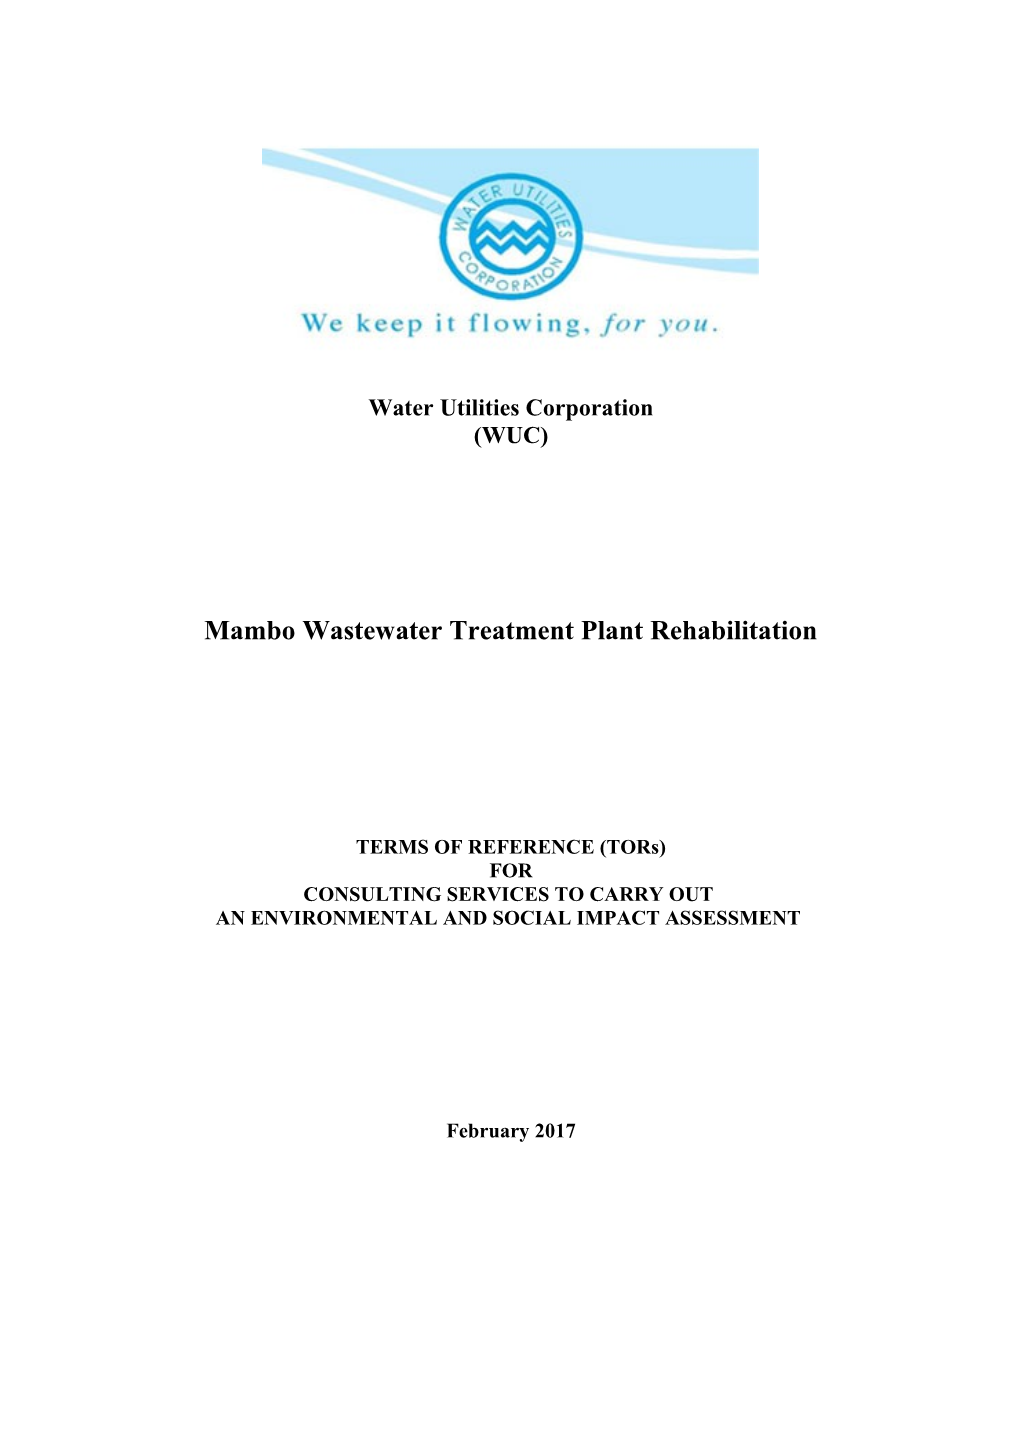 Mambo Wastewater Treatment Plant Rehabilitation